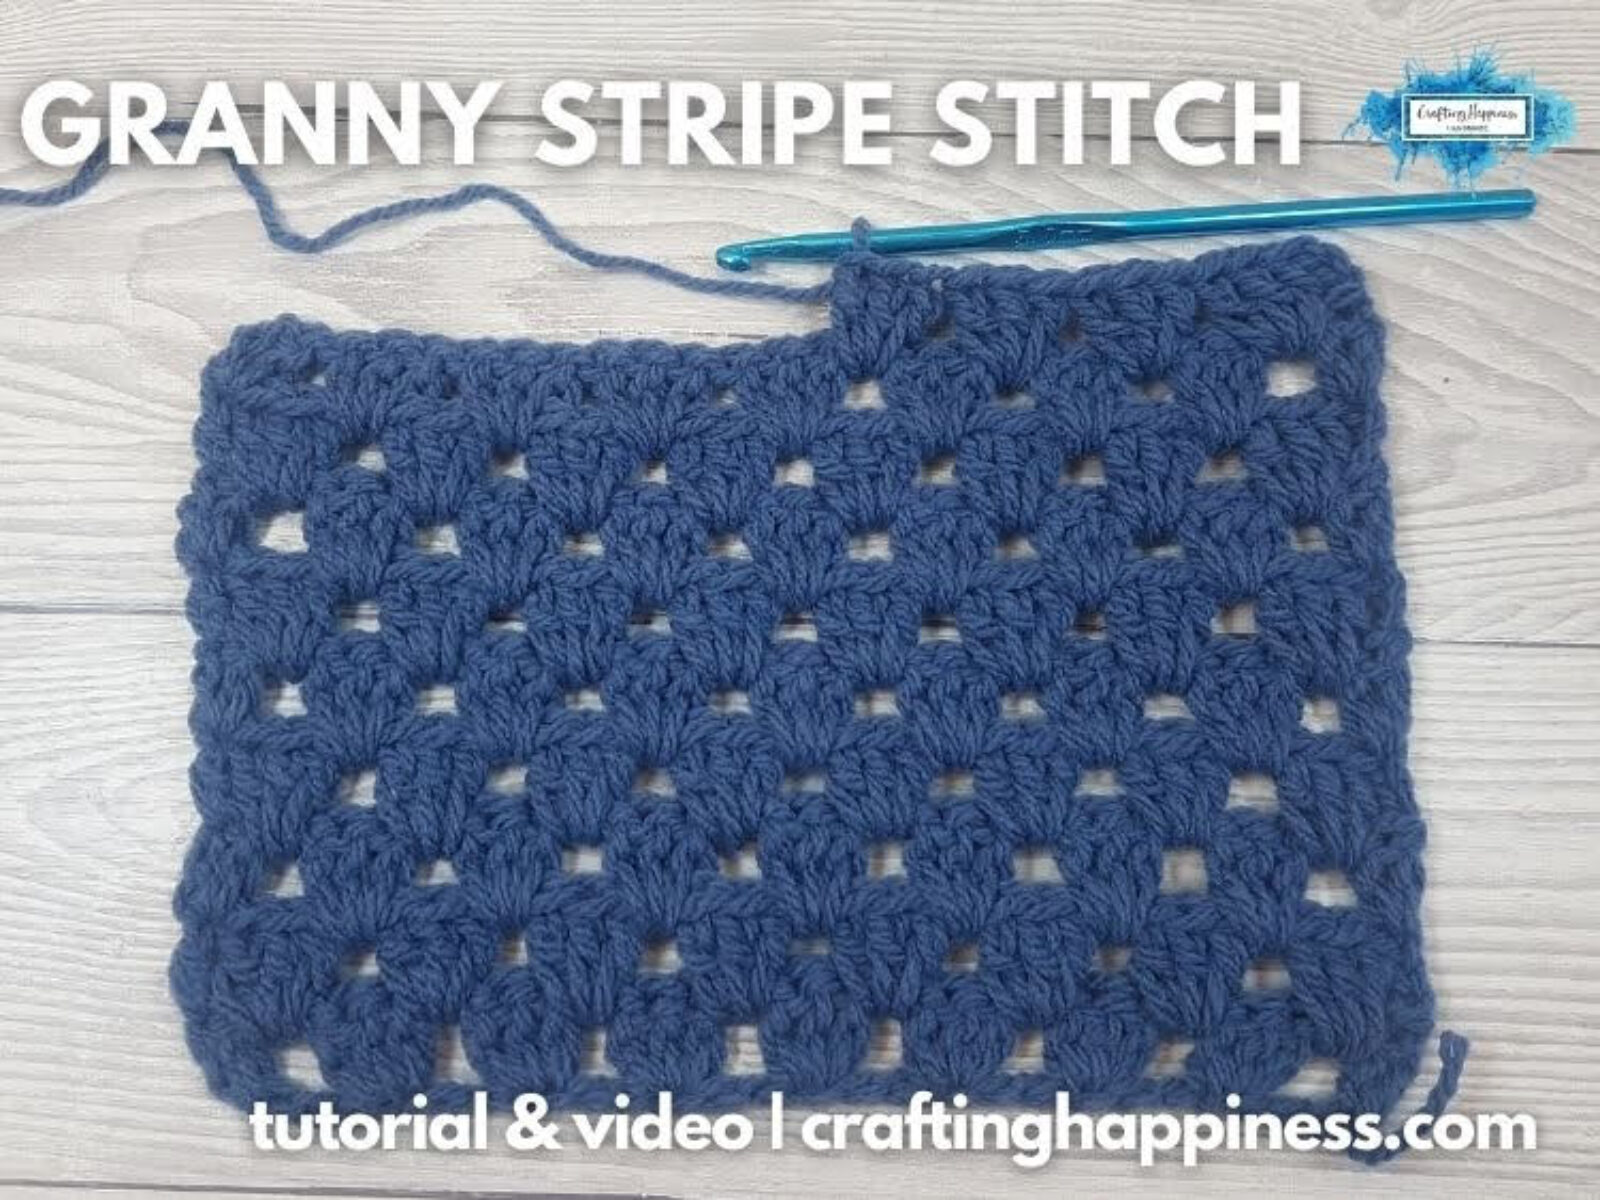 FB BLOG POSTER - Granny Stripe Stitch Crafting Happiness